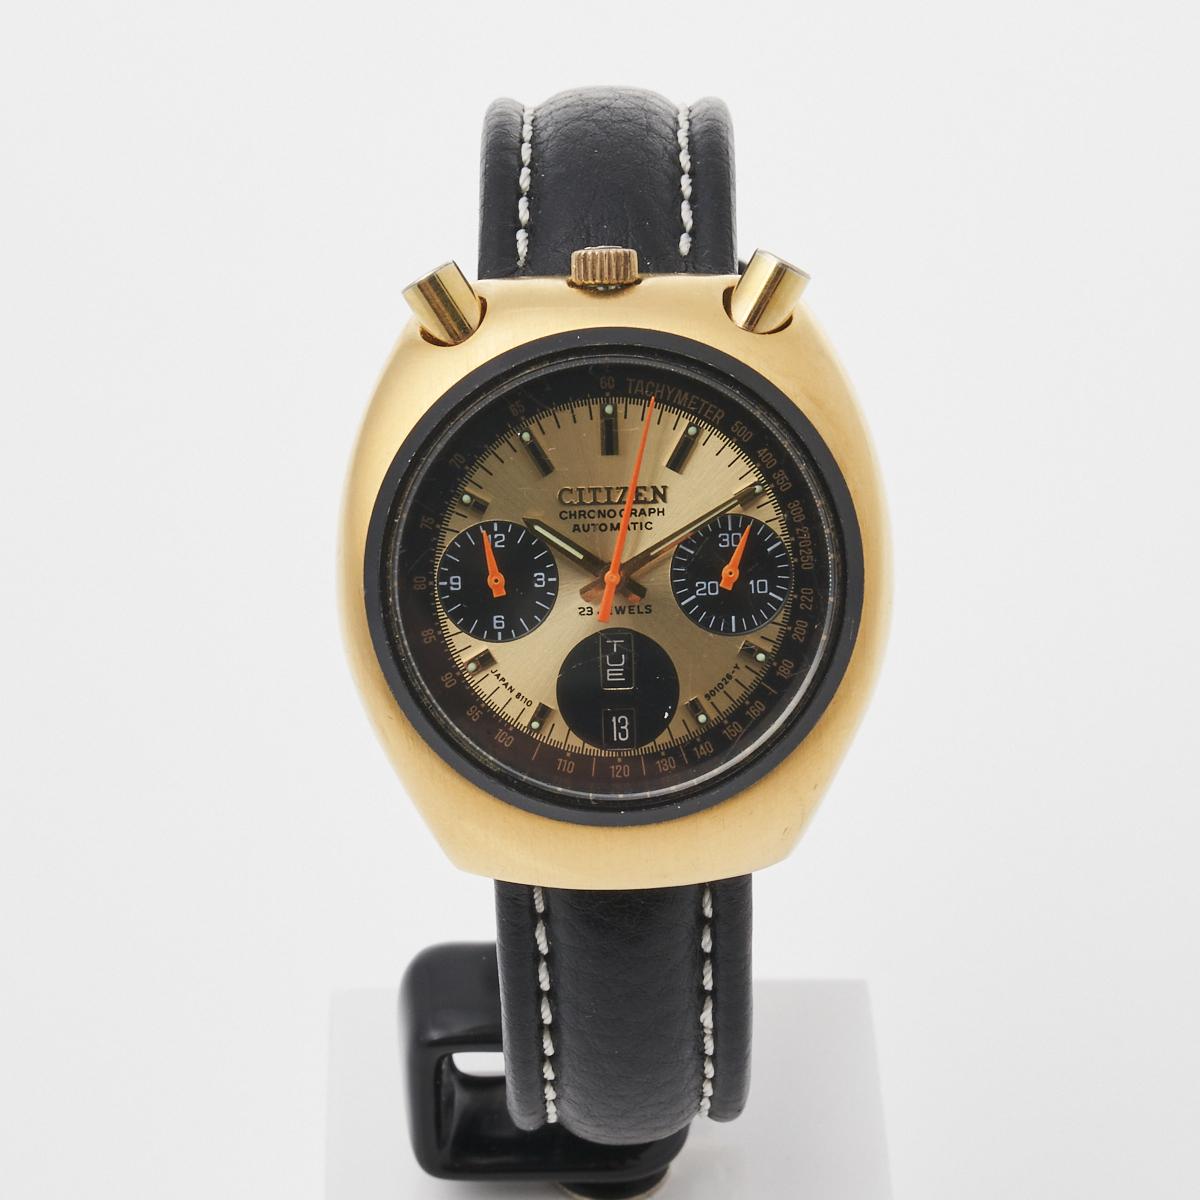 Rare, Gold Plated Citizen bullhead chronograph watch